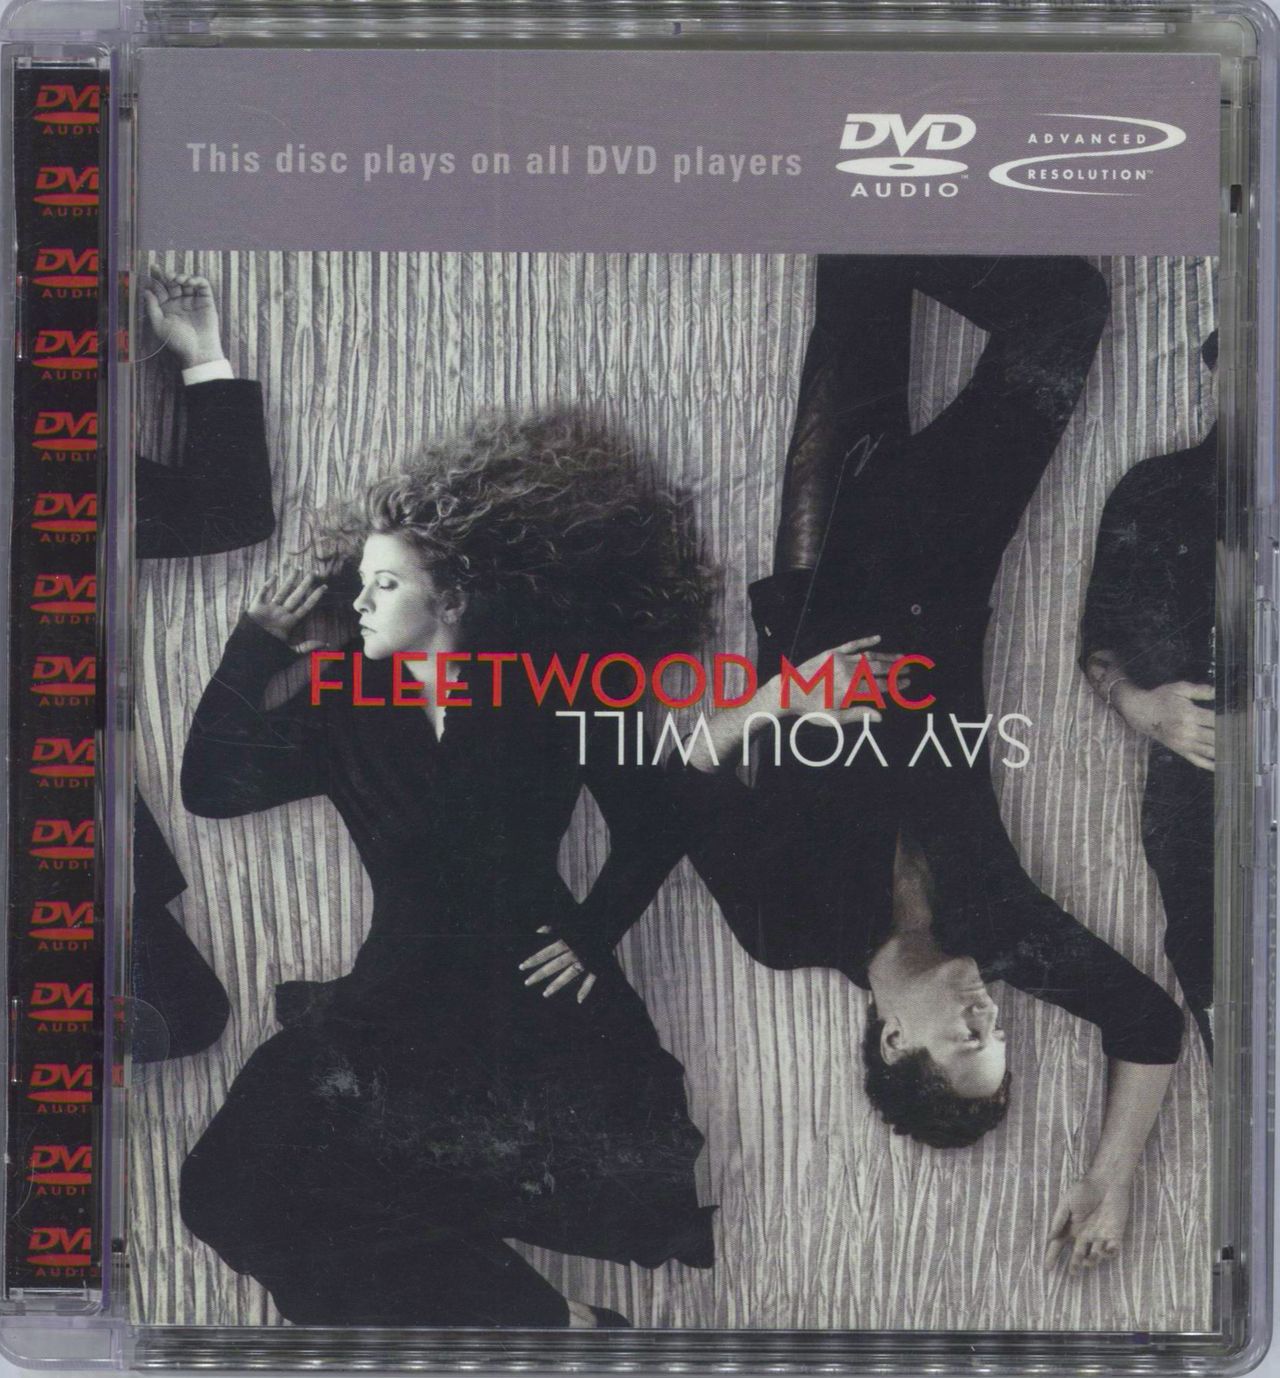 Fleetwood Mac Say You Will German DVD-Audio disc